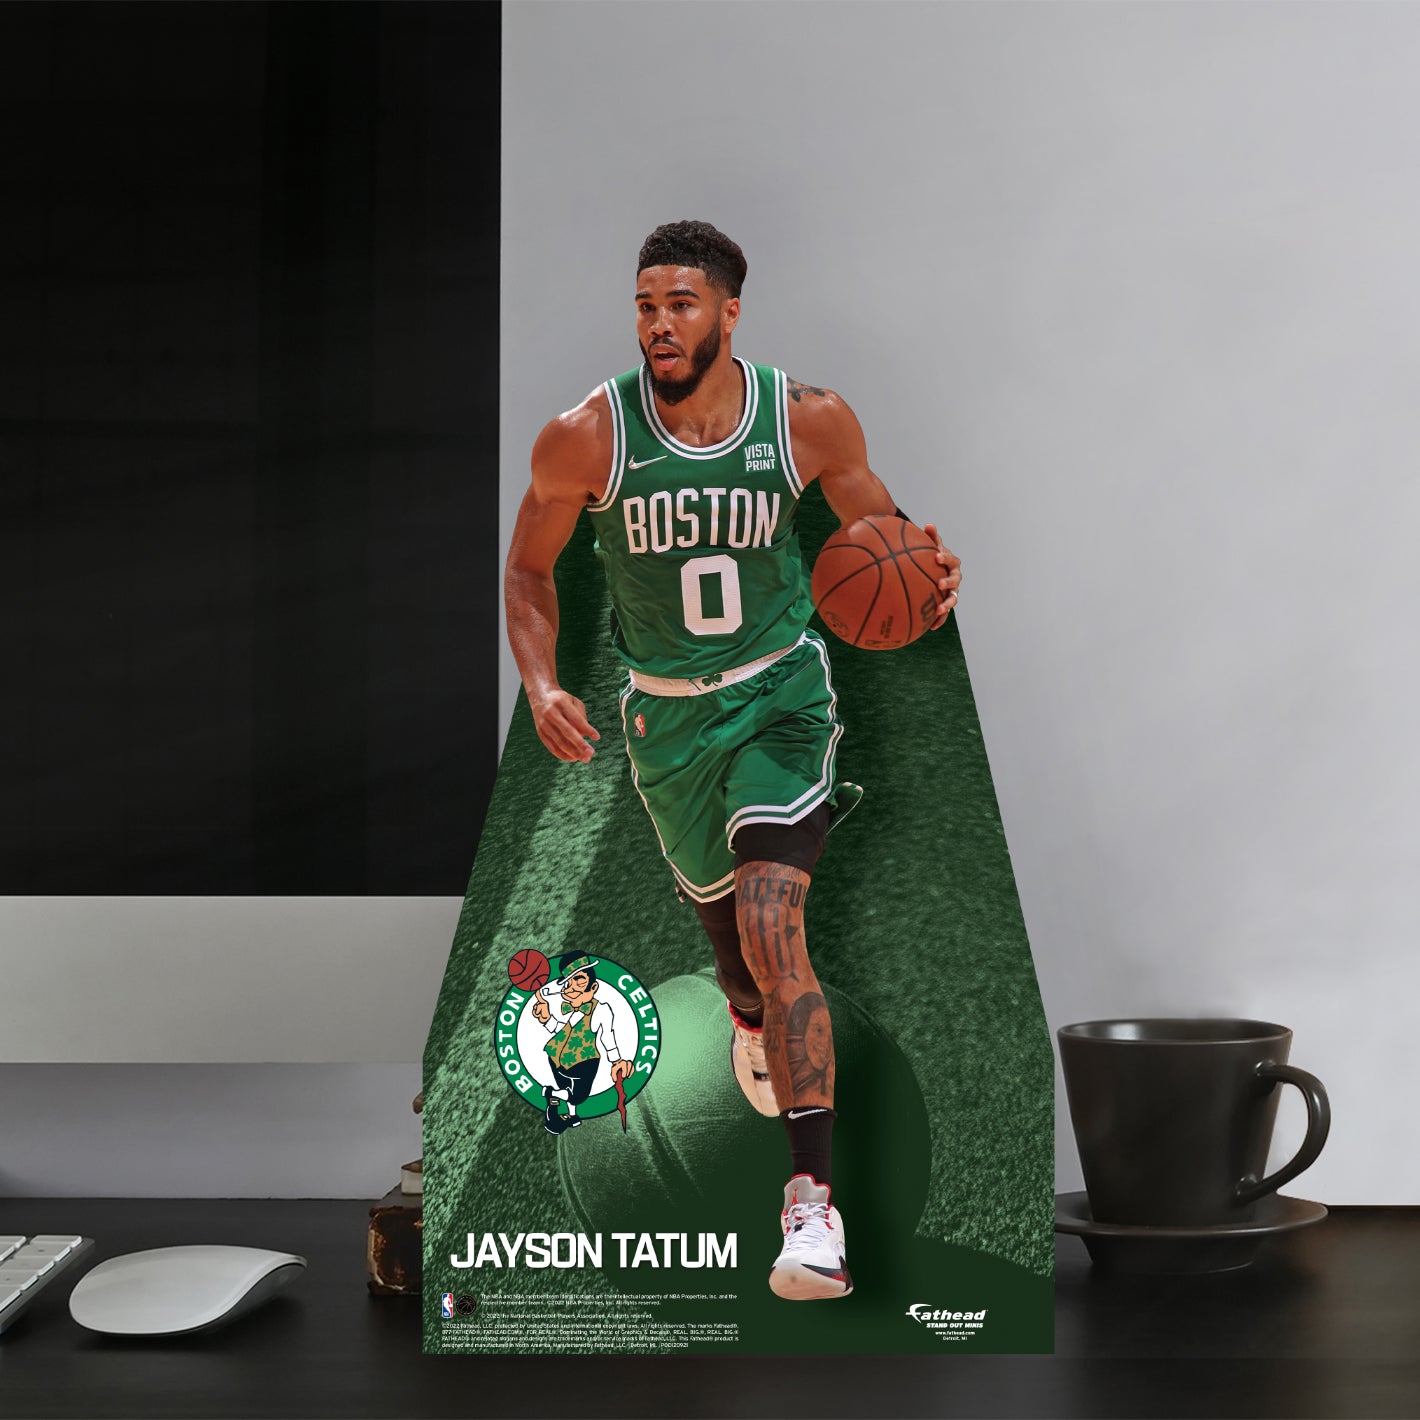 Boston Celtics: Jayson Tatum 2021  Mini   Cardstock Cutout  - Officially Licensed NBA    Stand Out